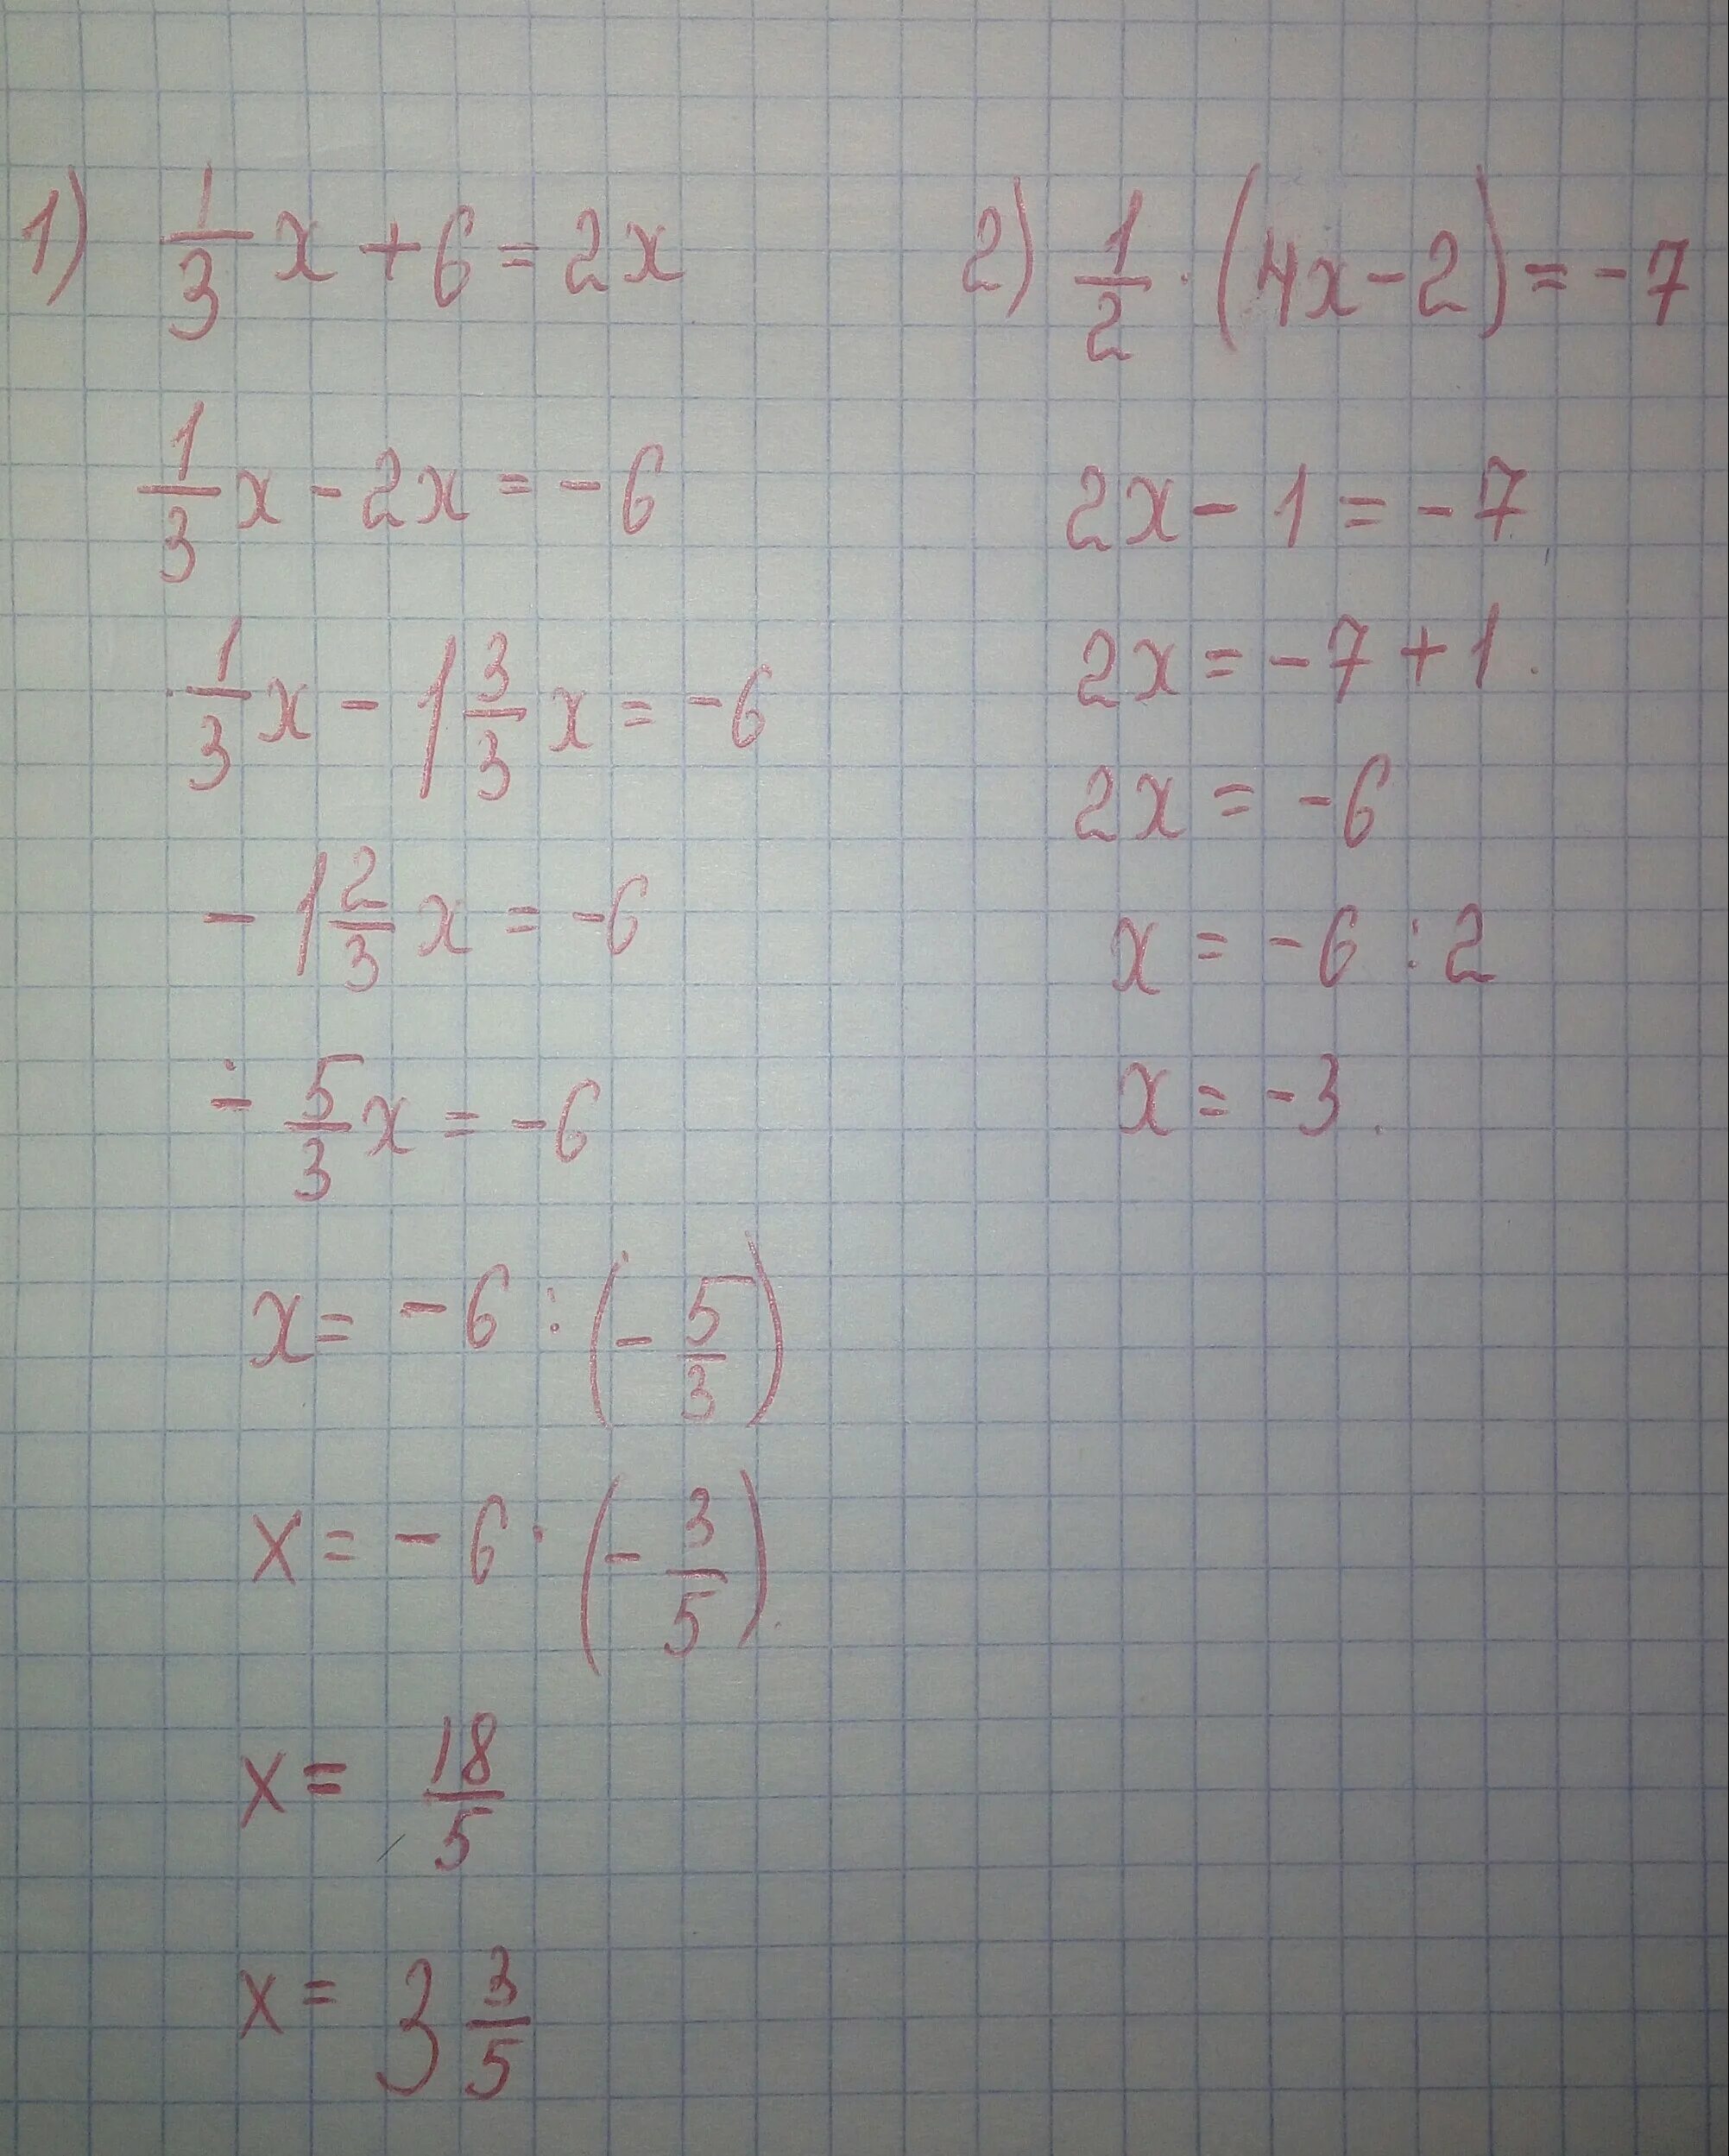 3 5 x 63. 63:(14-X)=7. X2-2x-63. 63x63 решения. Уравнение 63 14-х 7.